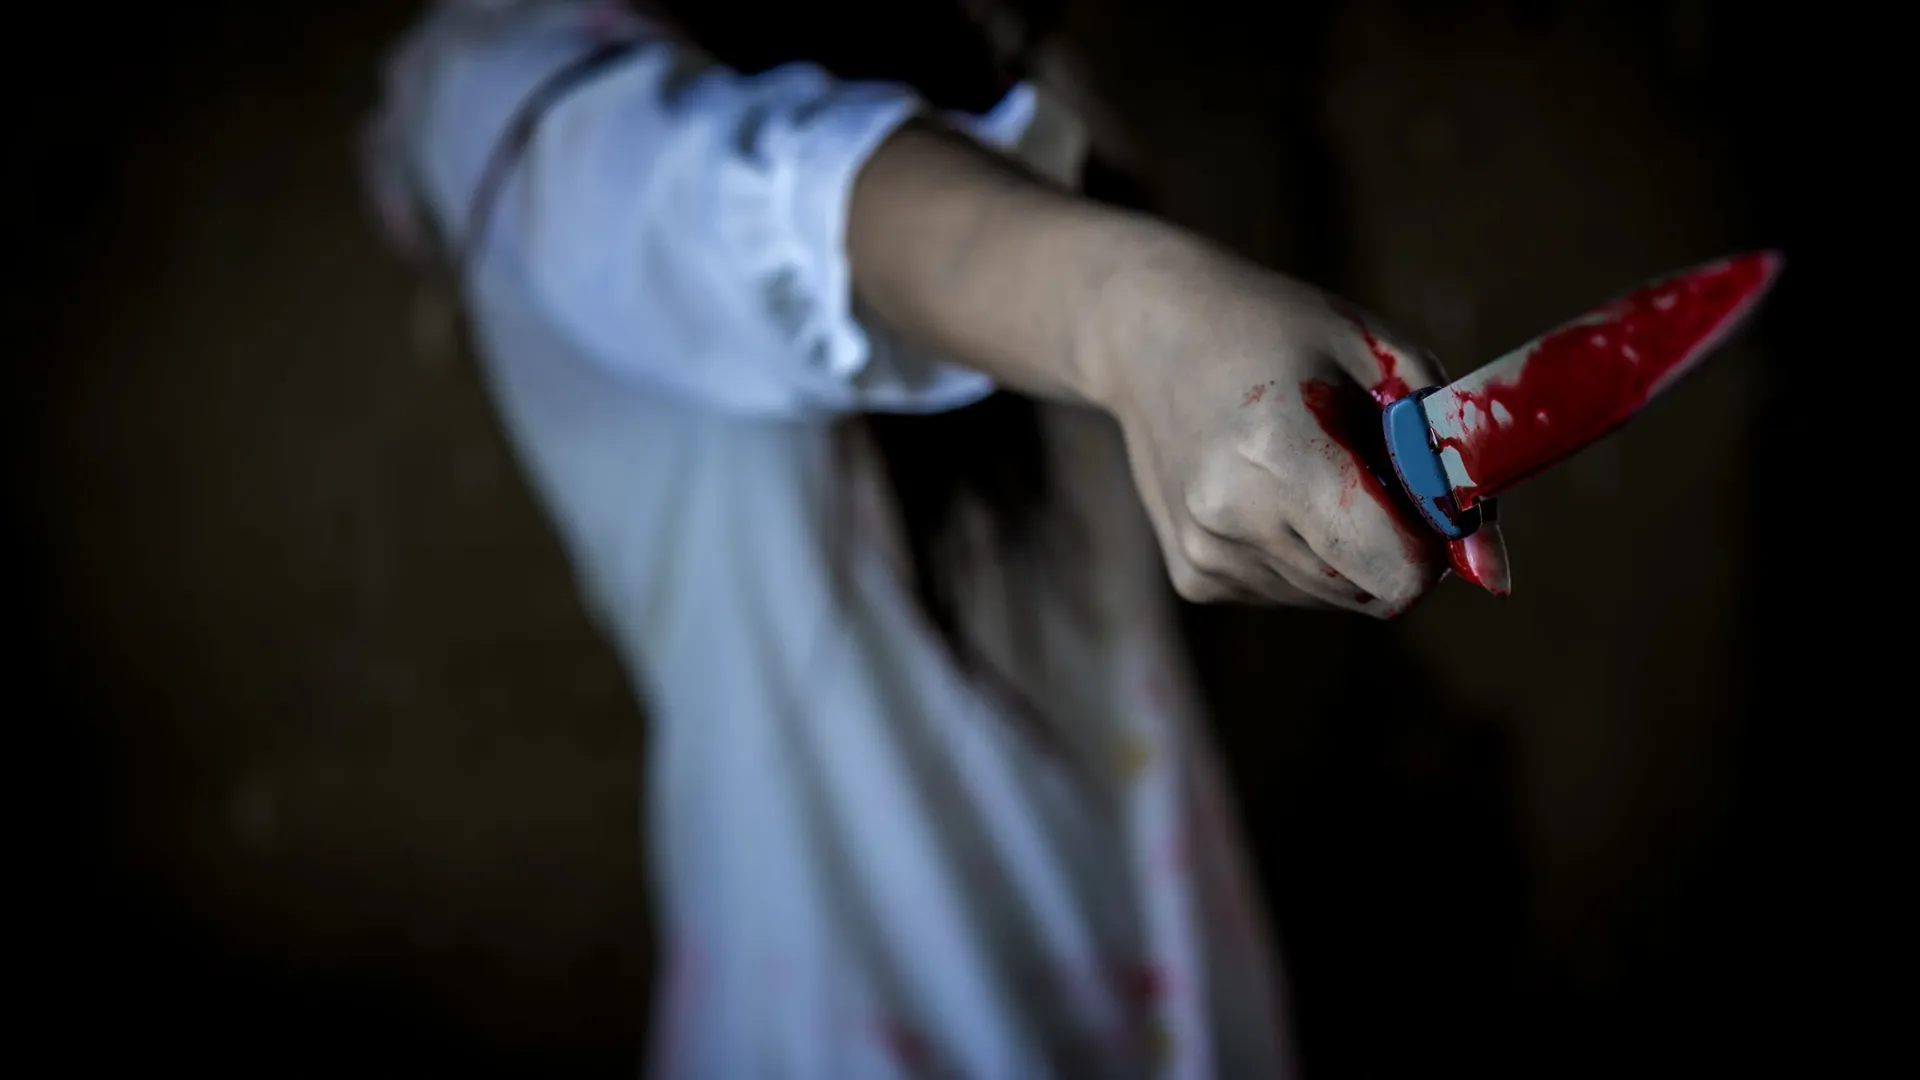 Женщина атаковала соперницу не только кулаками, но и ножом. Фото: MMD Creative / shutterstock.com / Fotodom